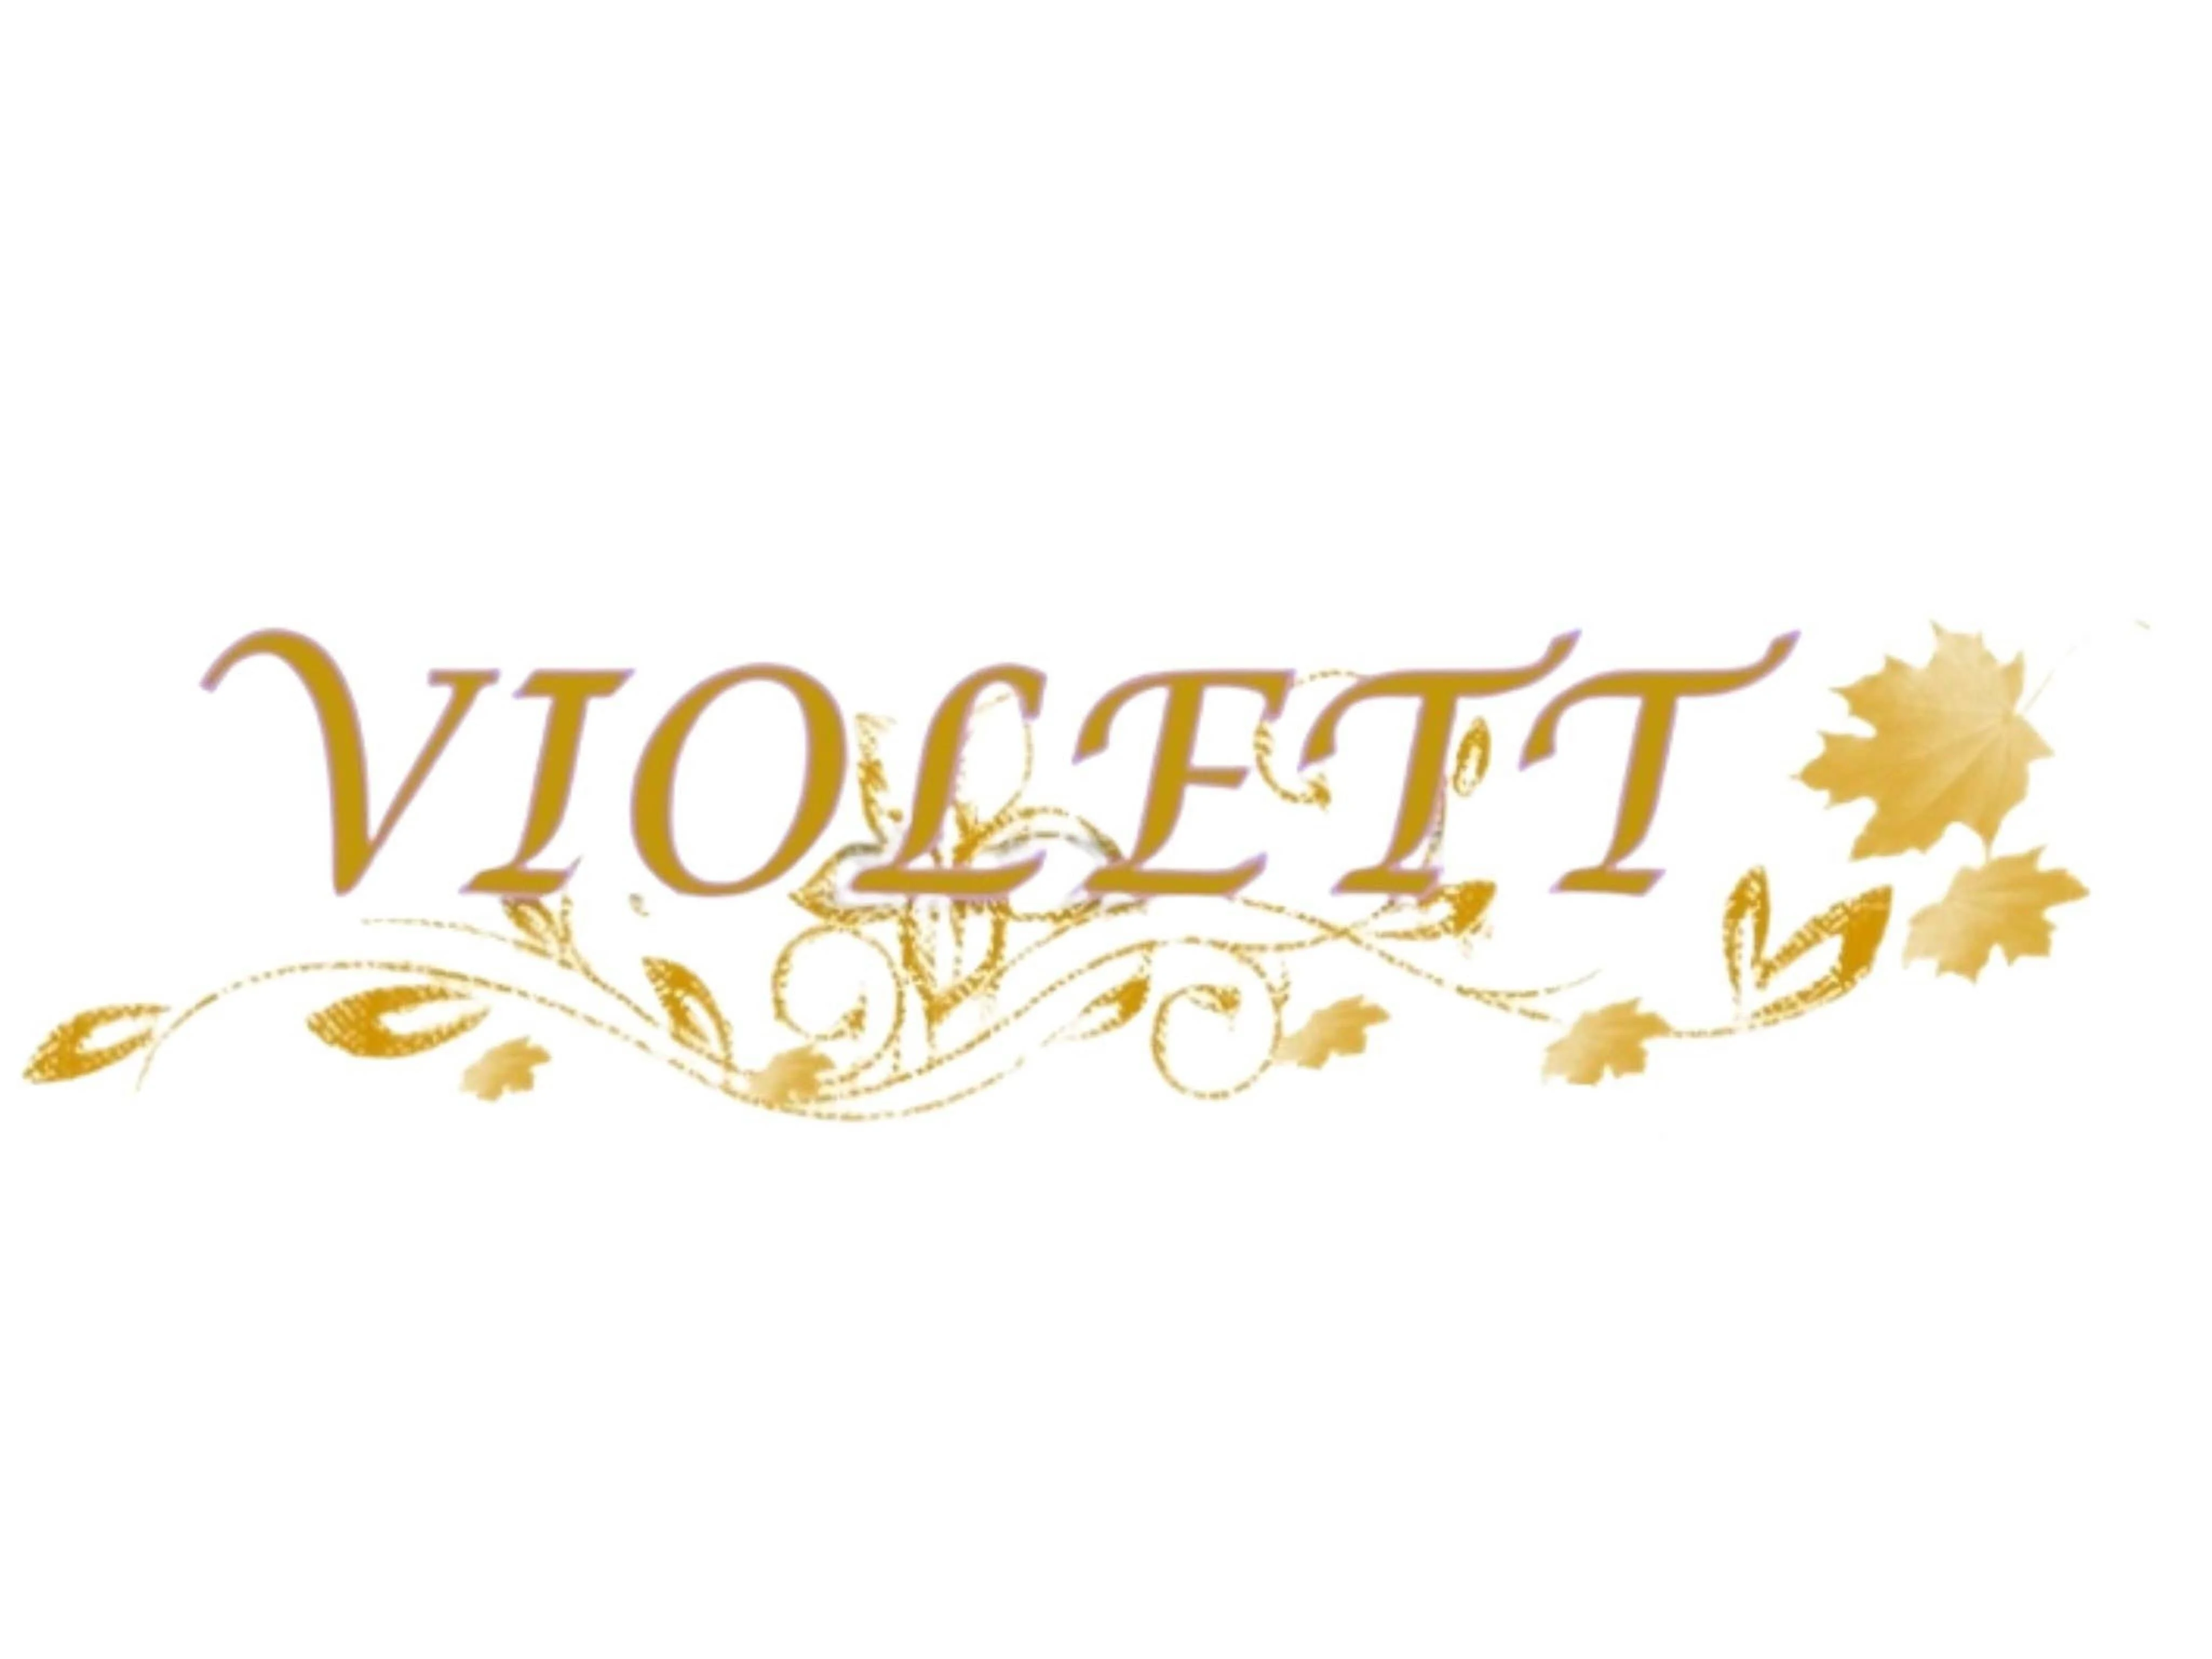 Violett spa-1183